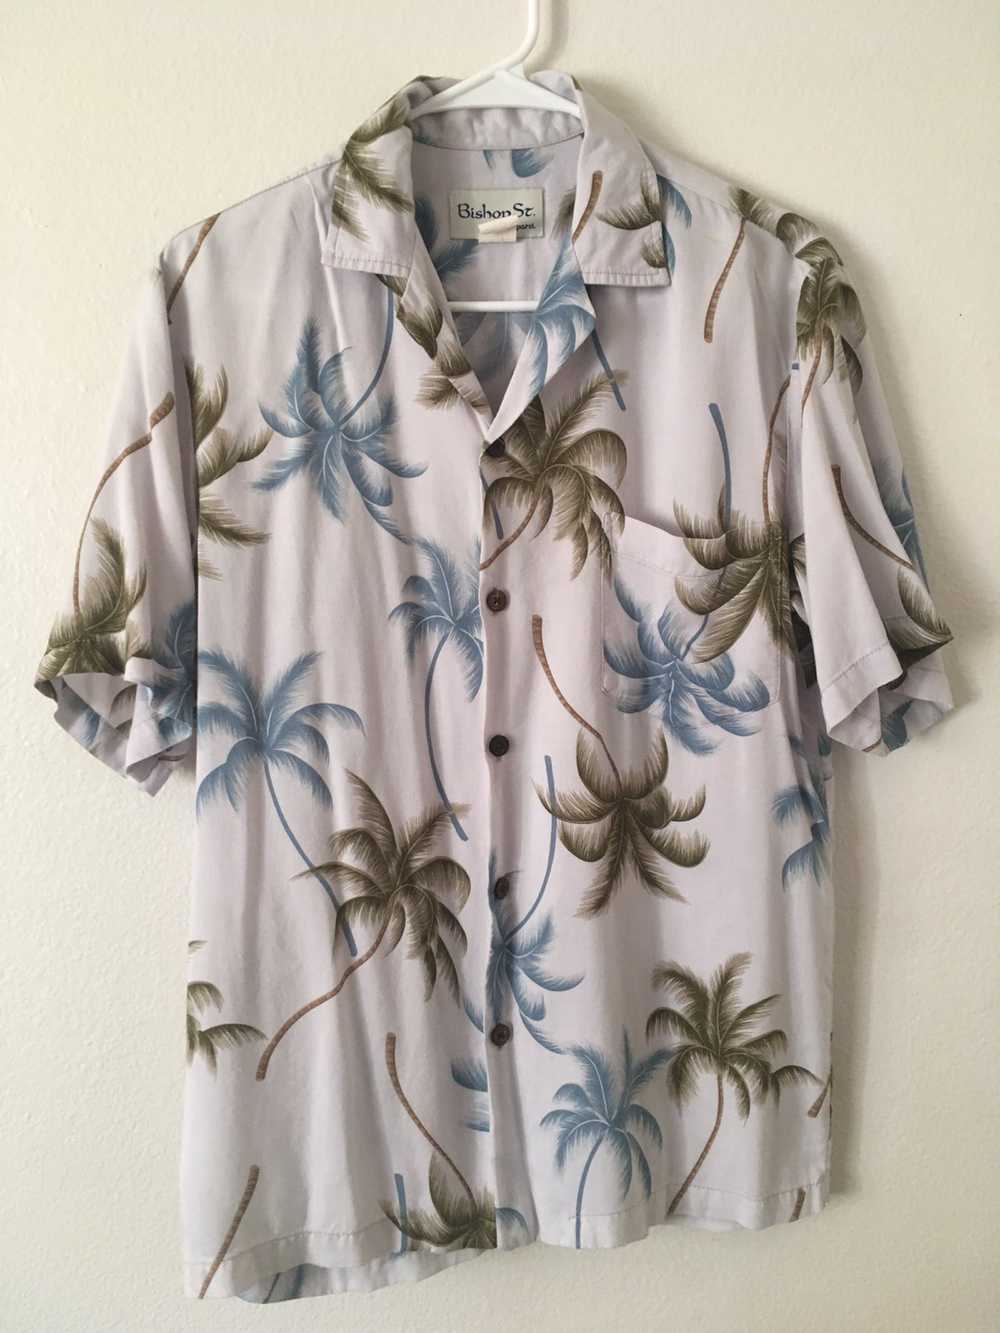 Vintage vintage bishop st hawaiian shirt - image 1